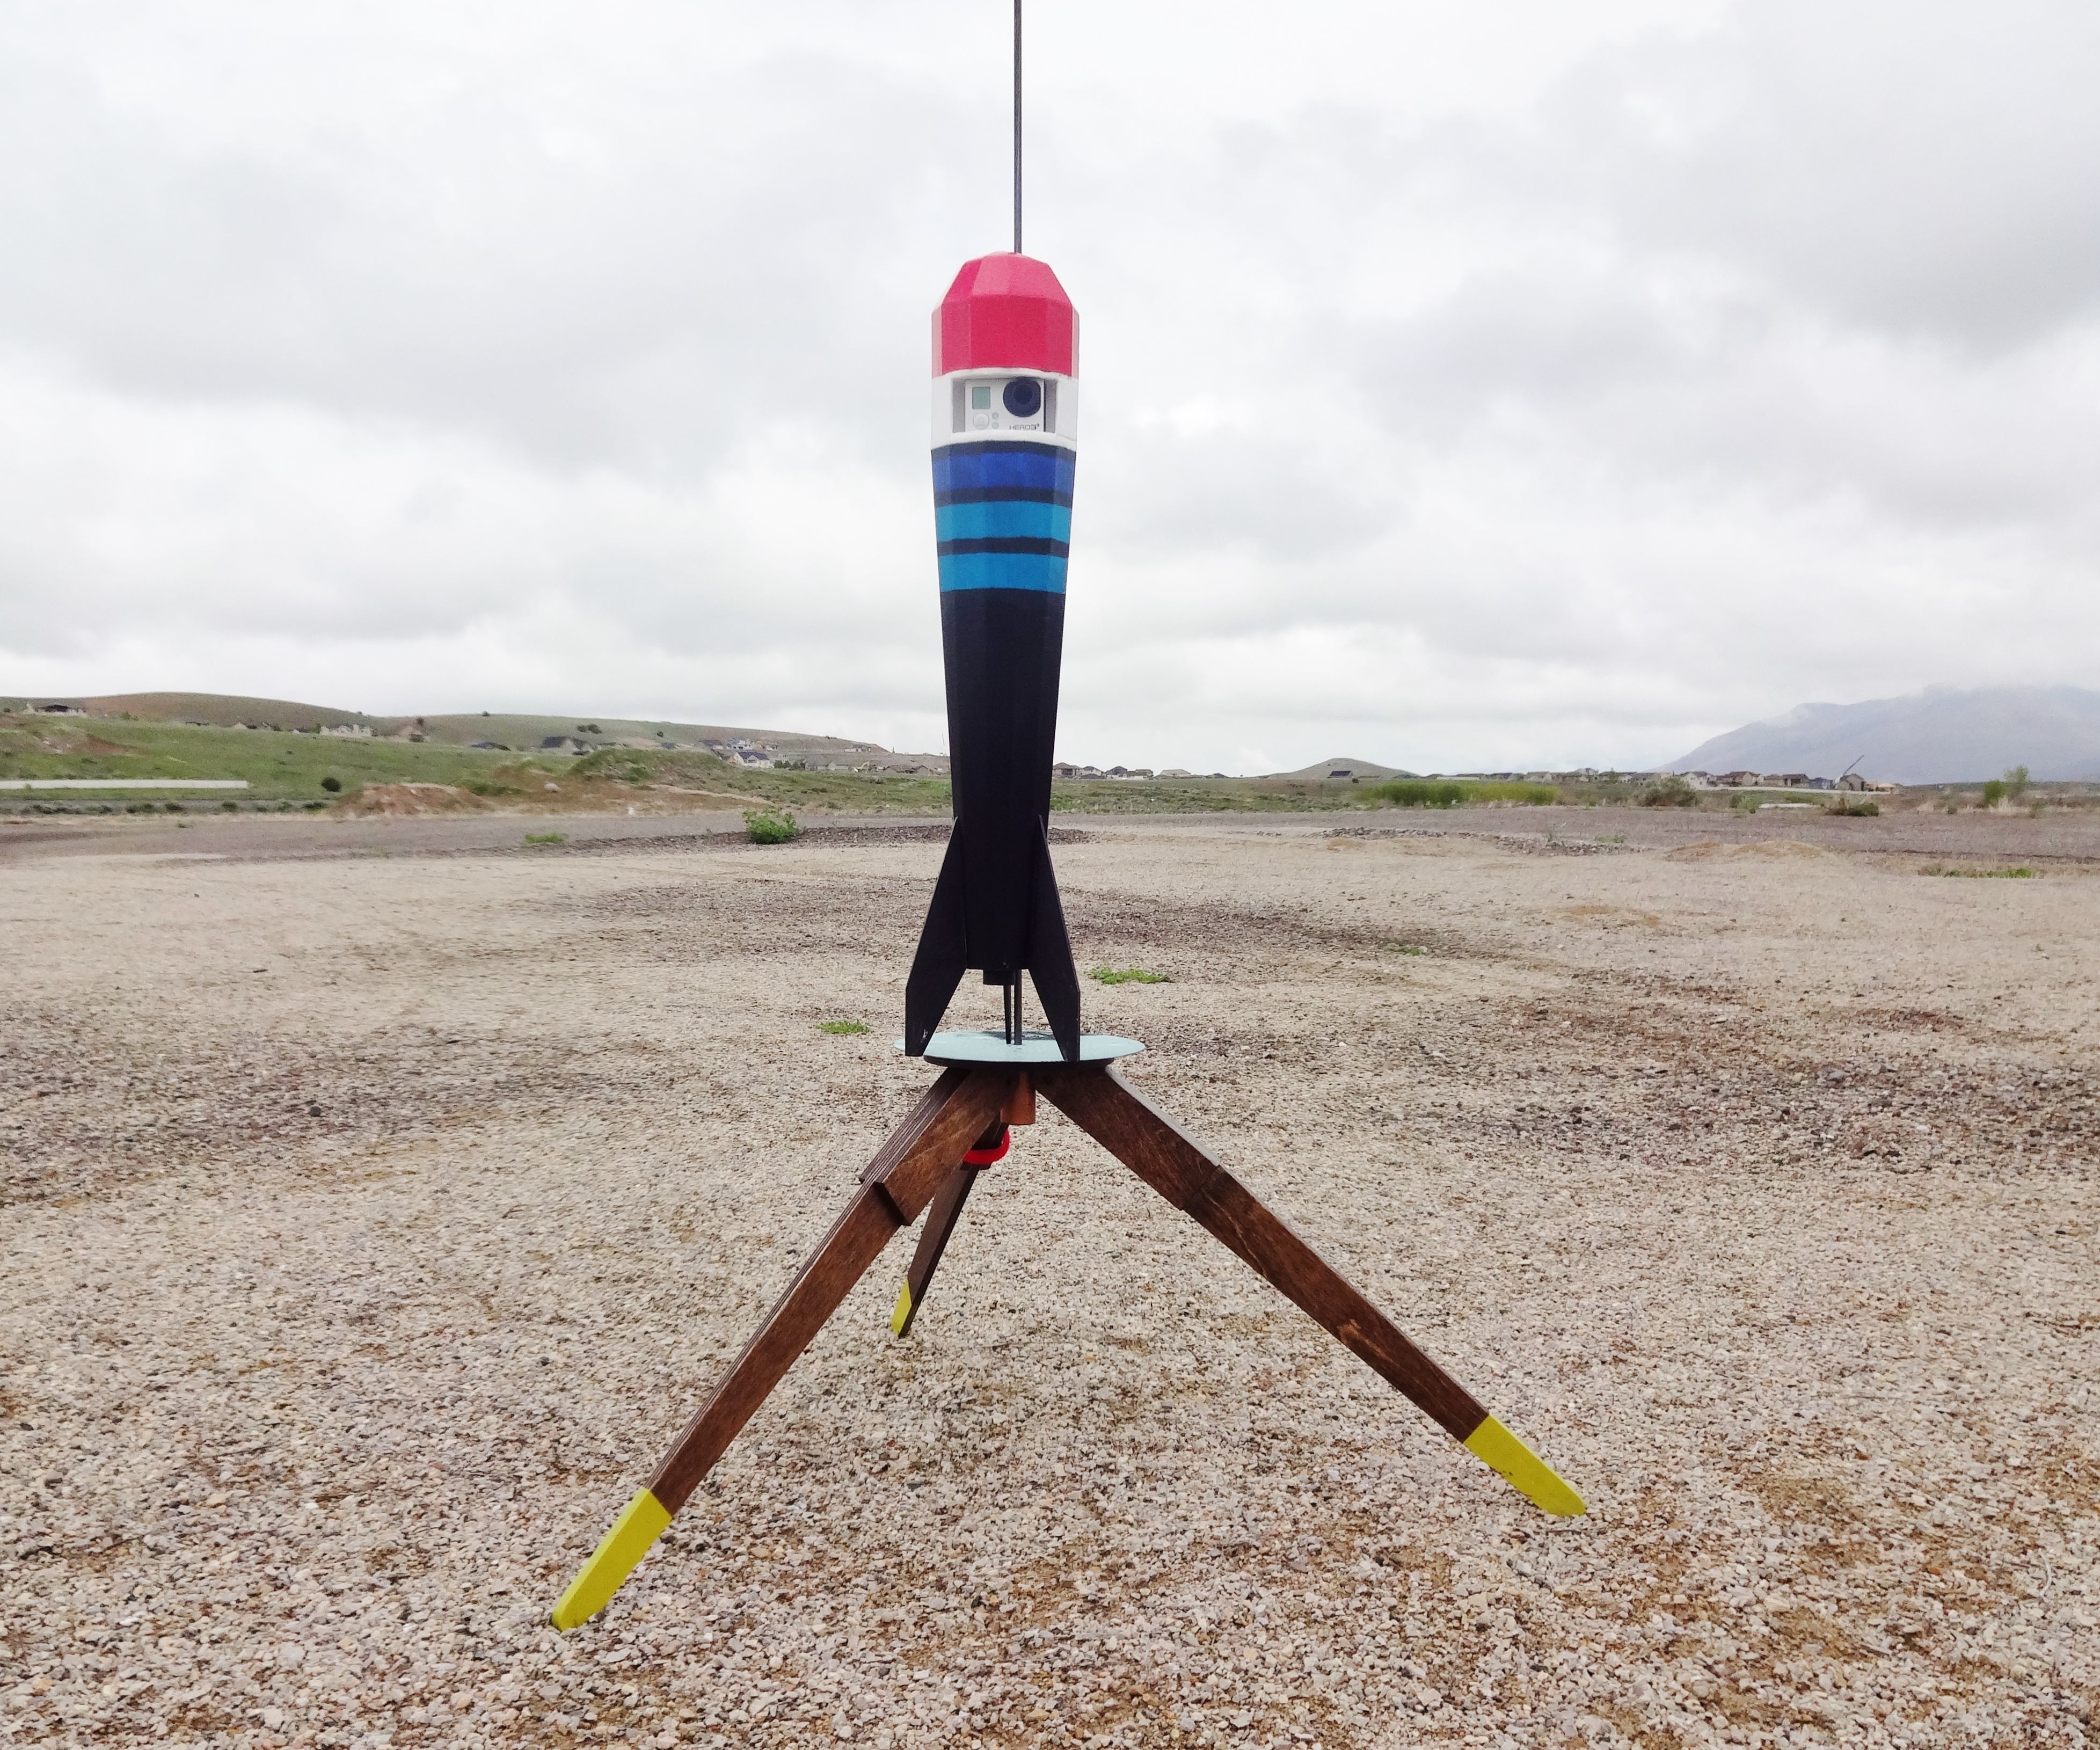 Model Rocket Launch Pad